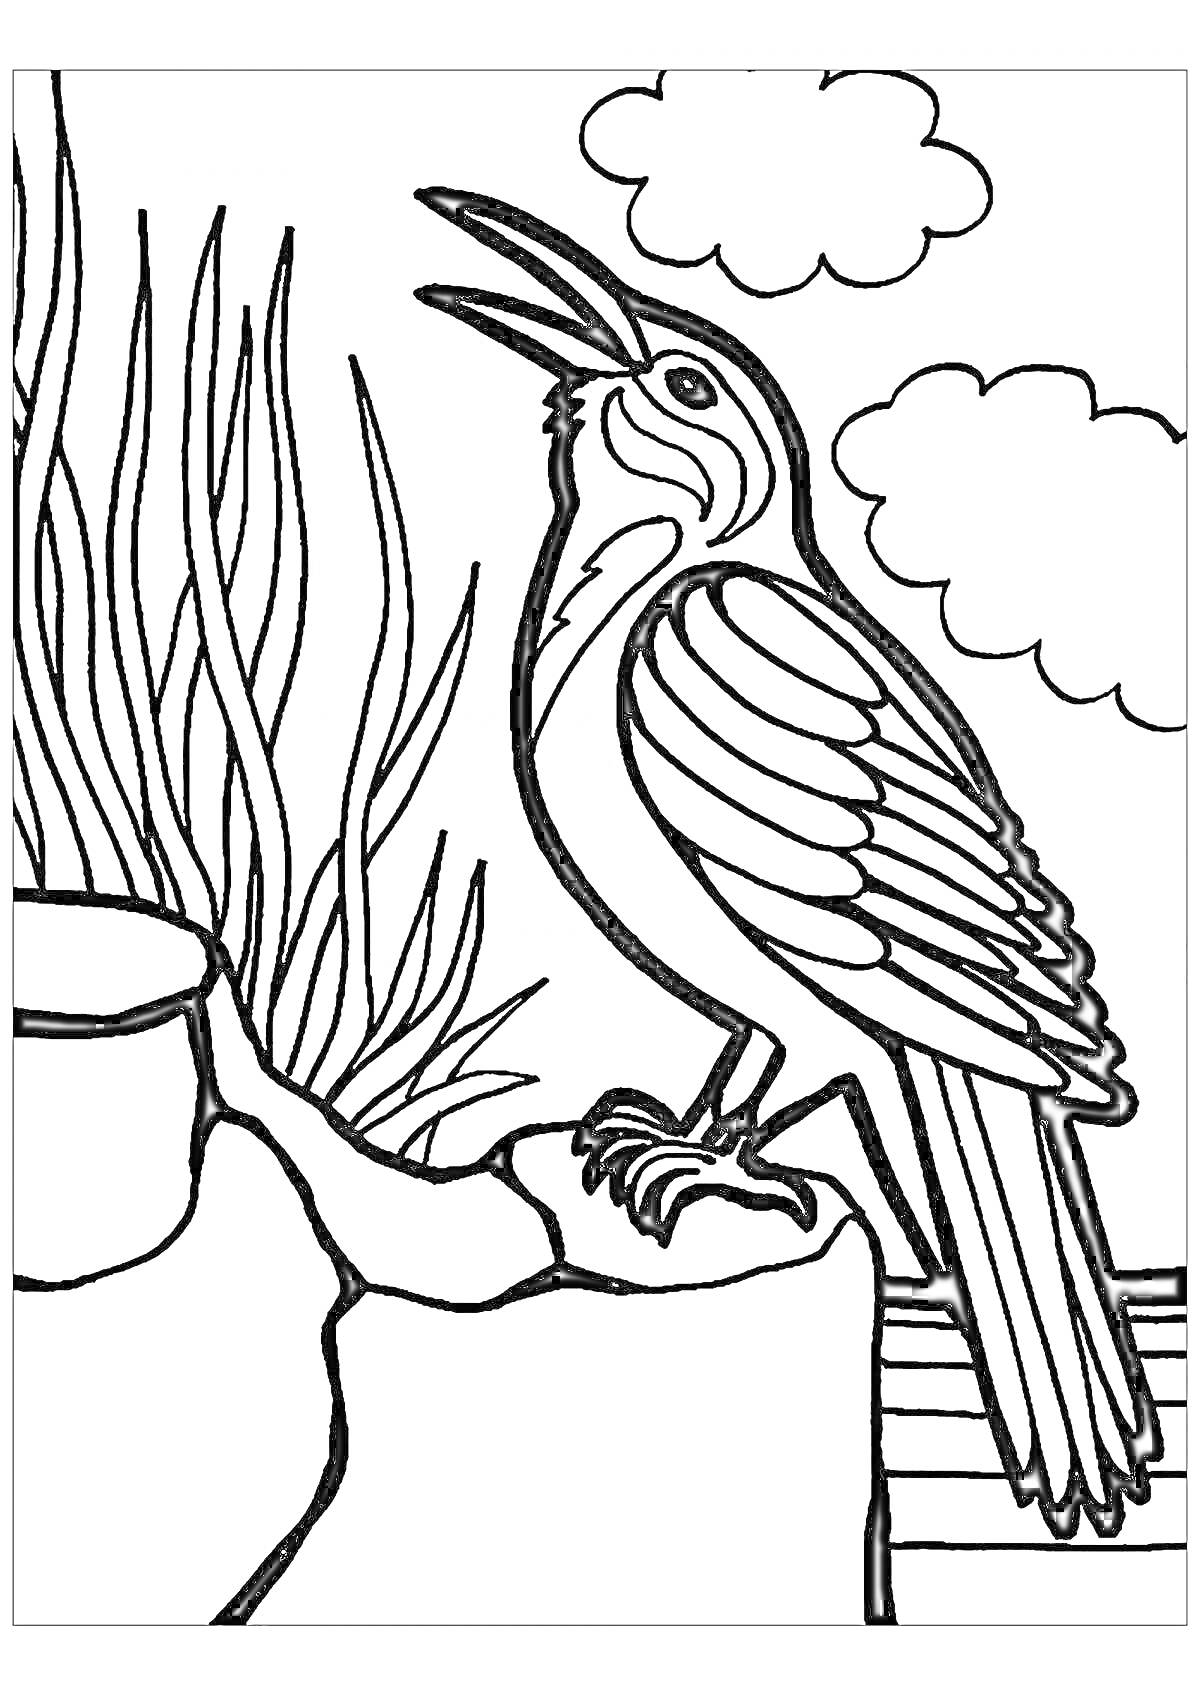 Раскраска Галчонок из Простоквашино, сидящий на заборе с видами облаков и кустов на заднем плане.